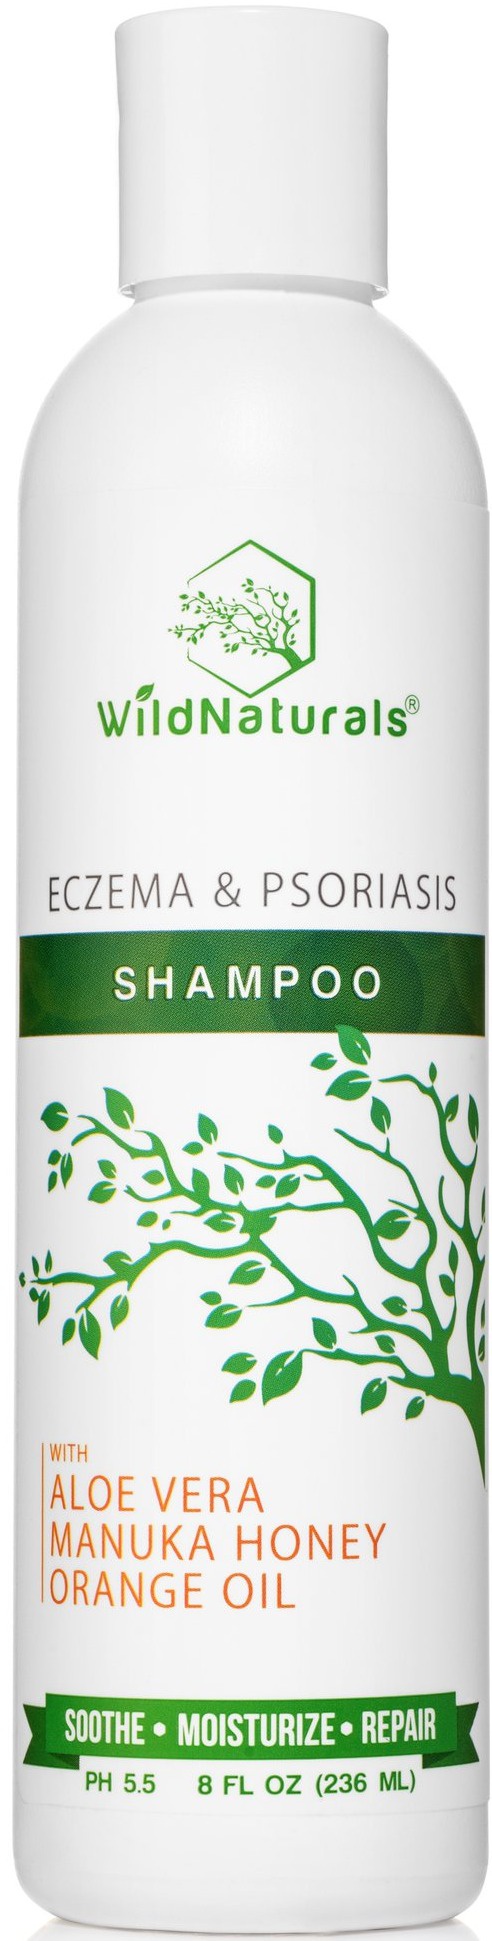 Wild naturals Eczema & Psoriasis Shampoo